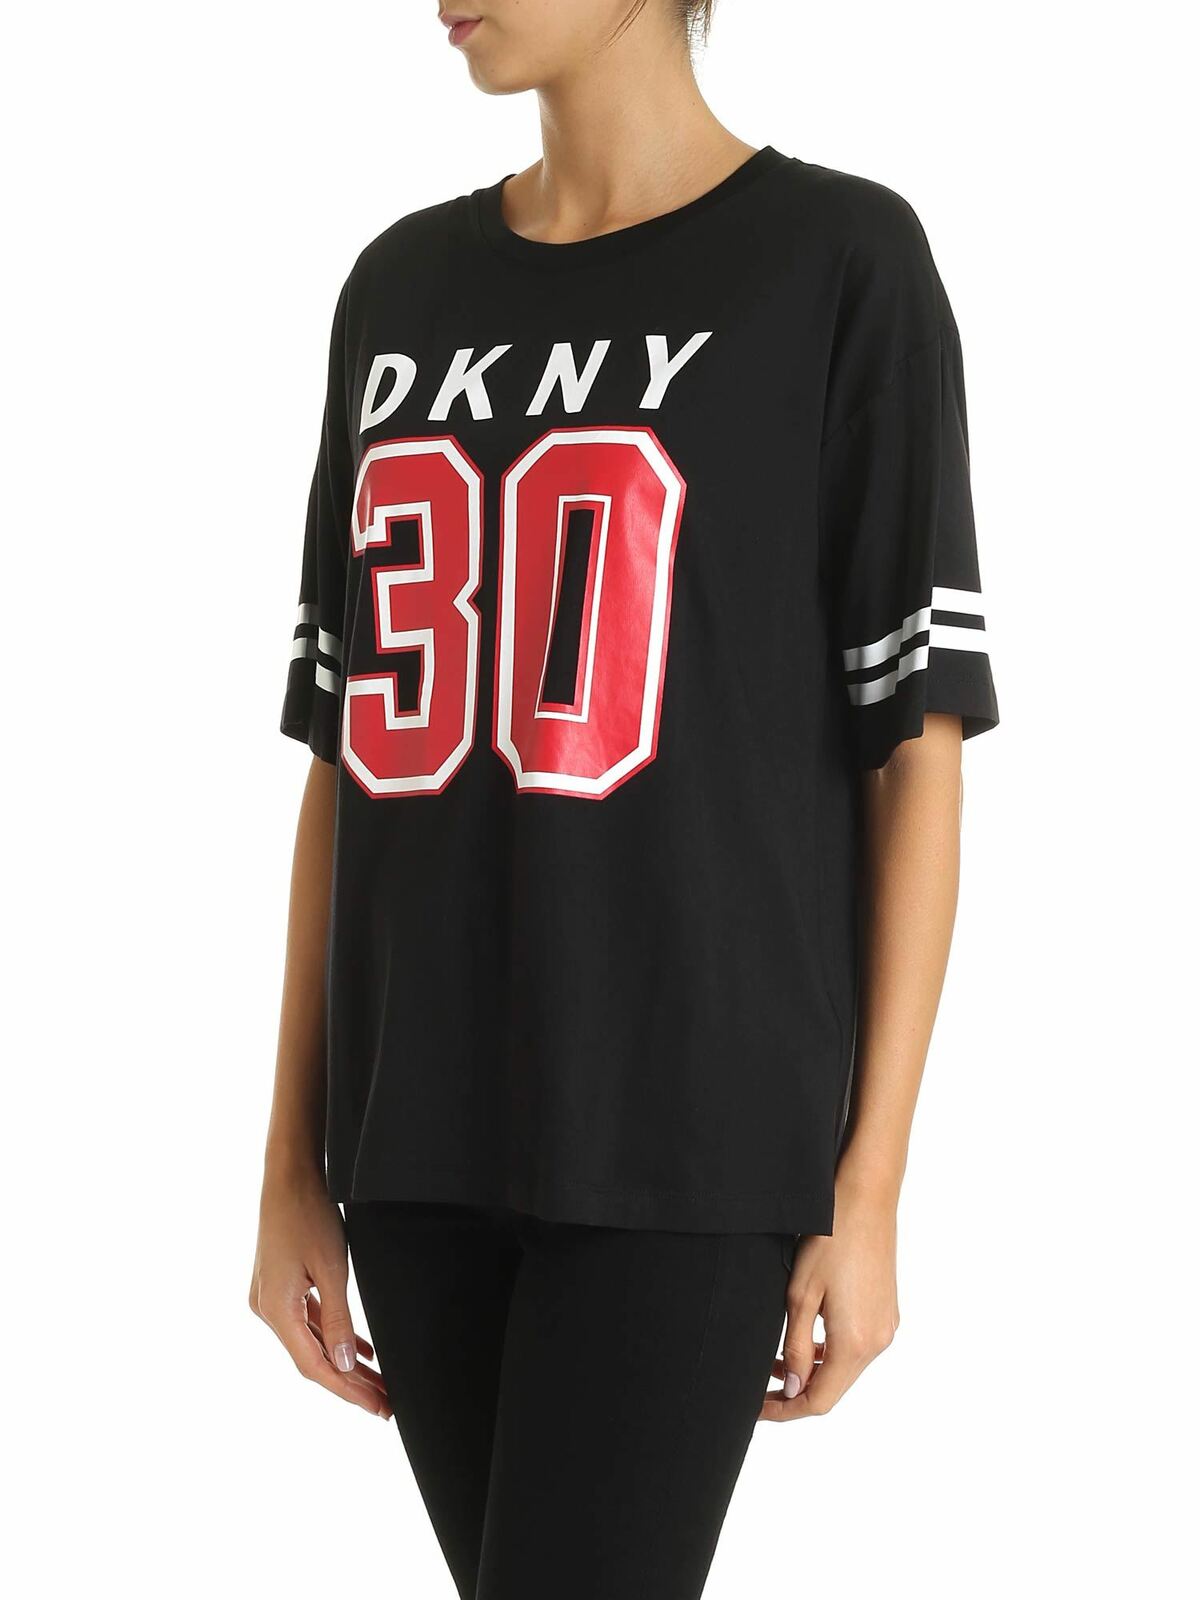 Shop Dkny 30 T-shirt In Black